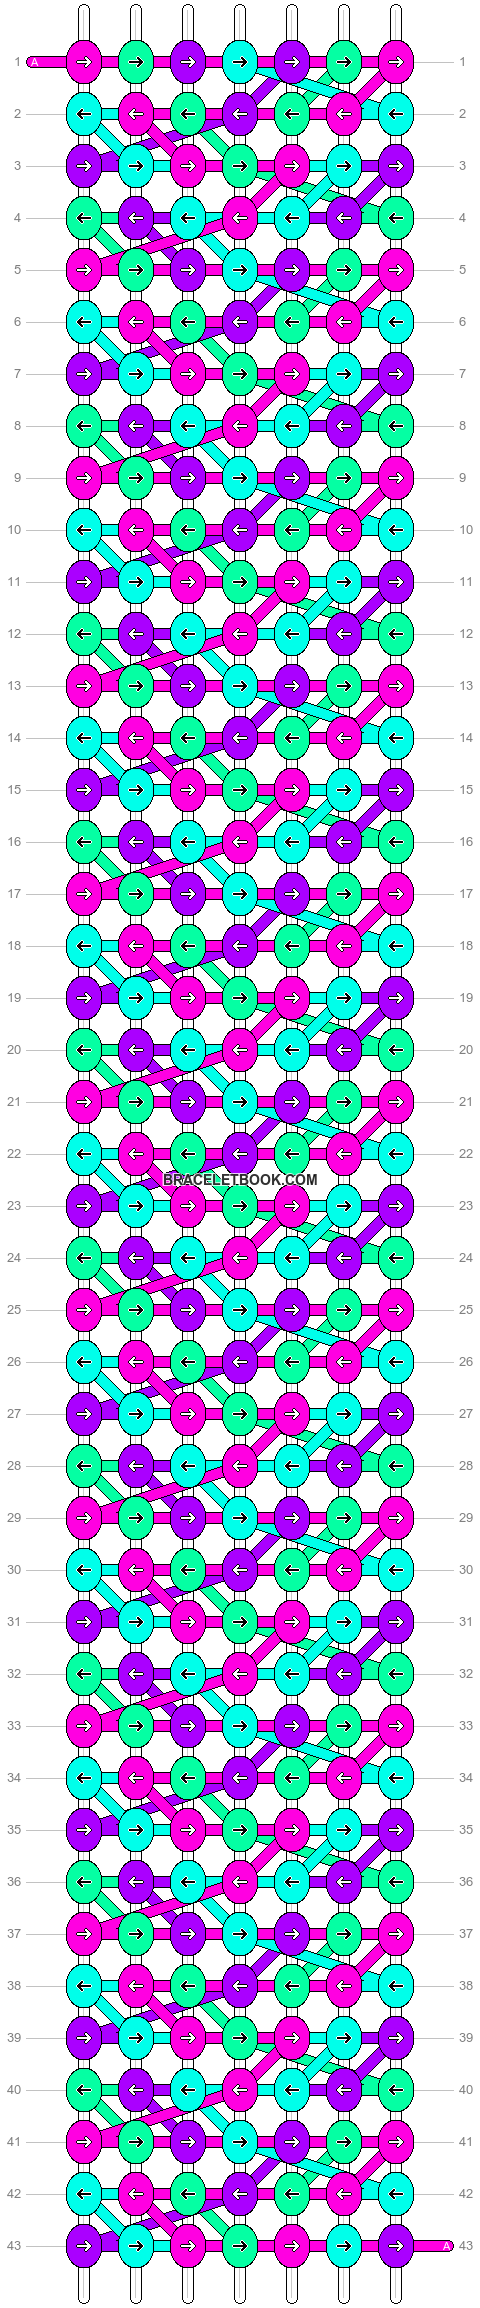 Alpha pattern #19599 pattern